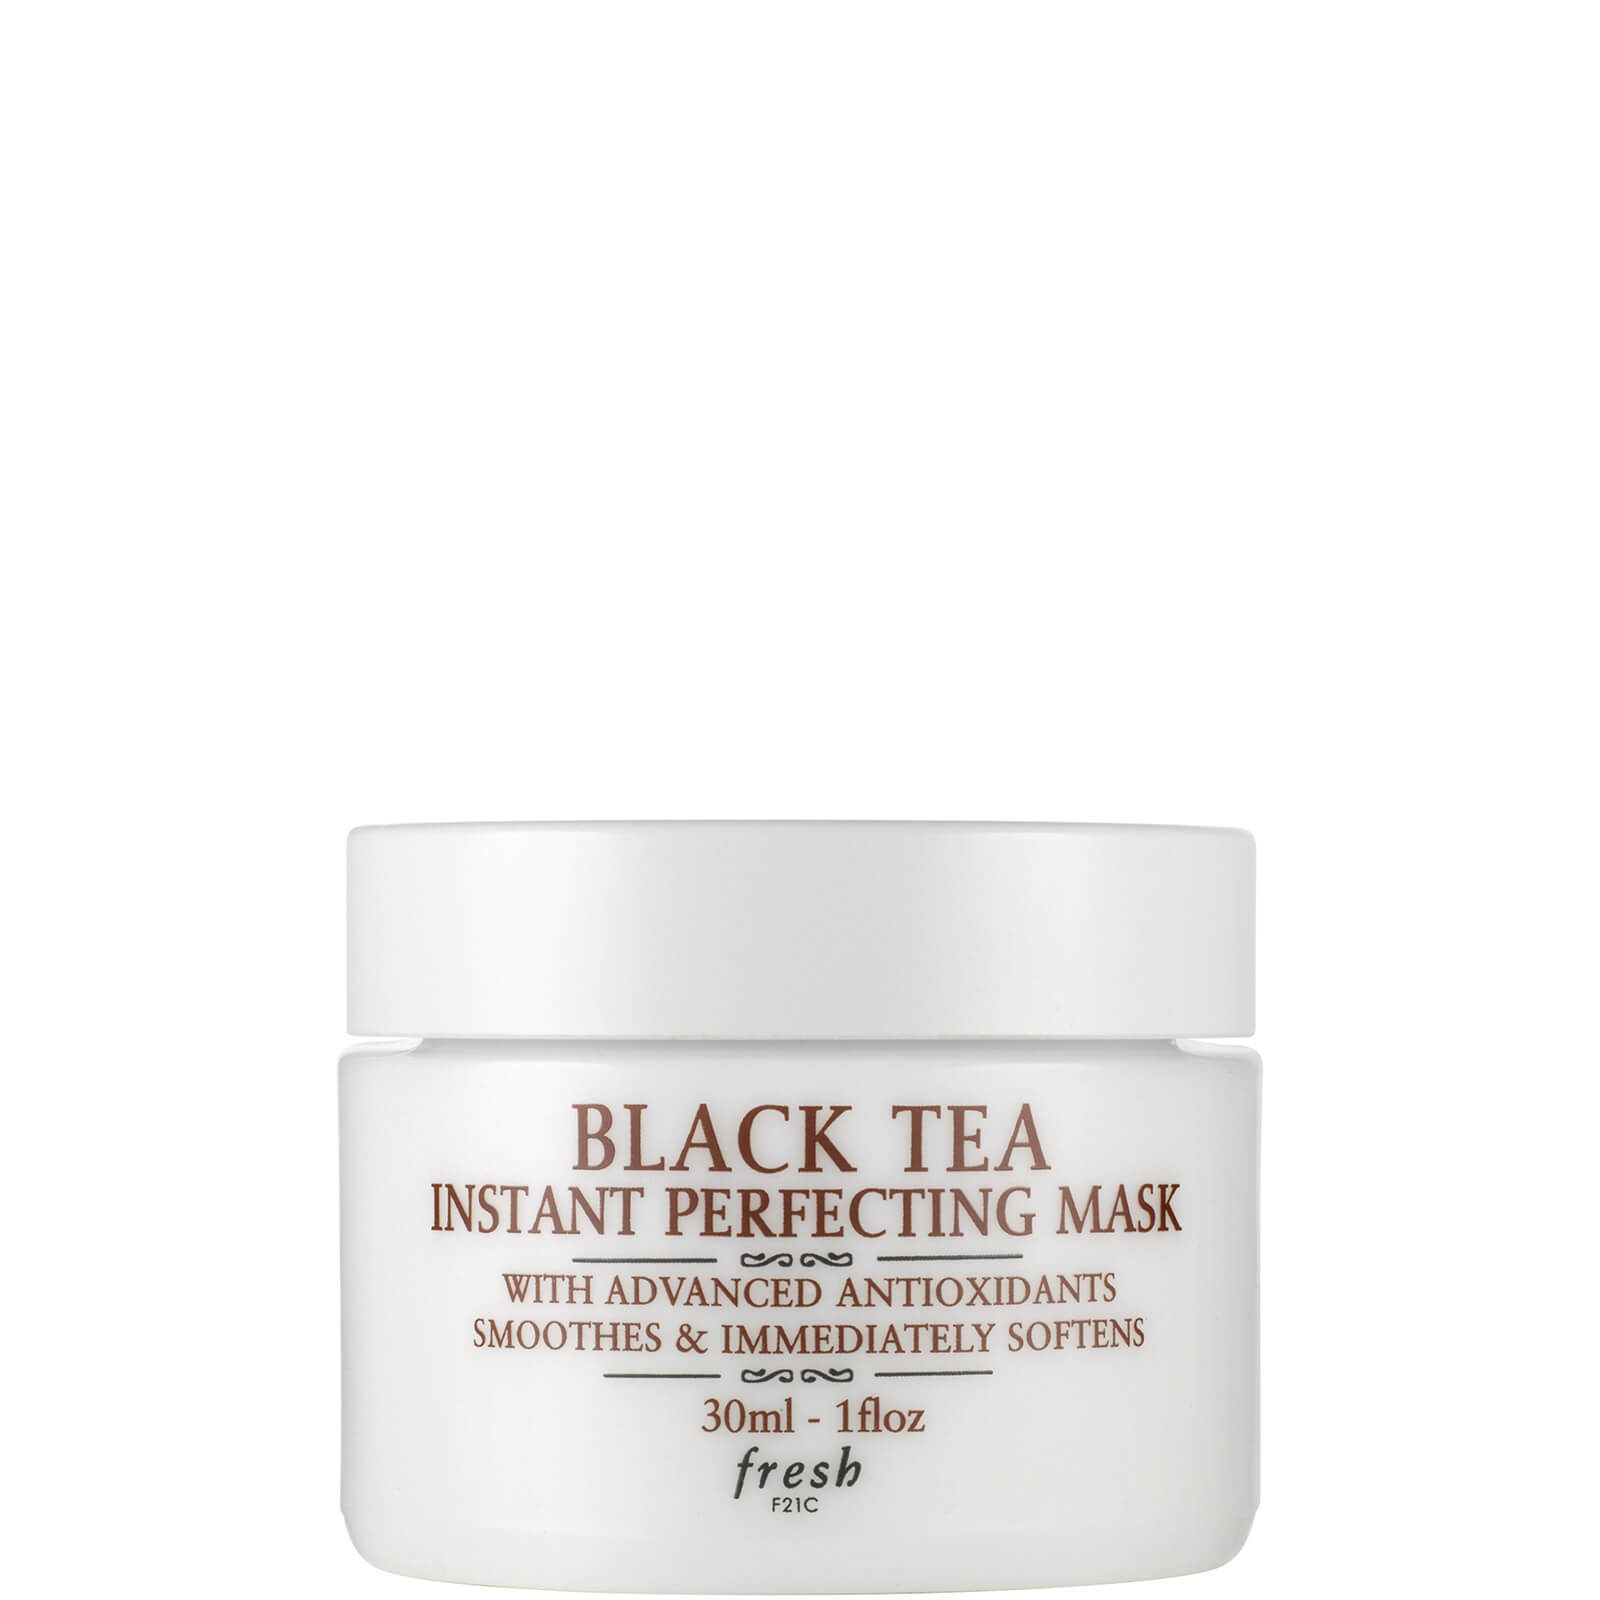 Fresh Black Tea Instant Perfecting Mask (Various Sizes) - 30ml